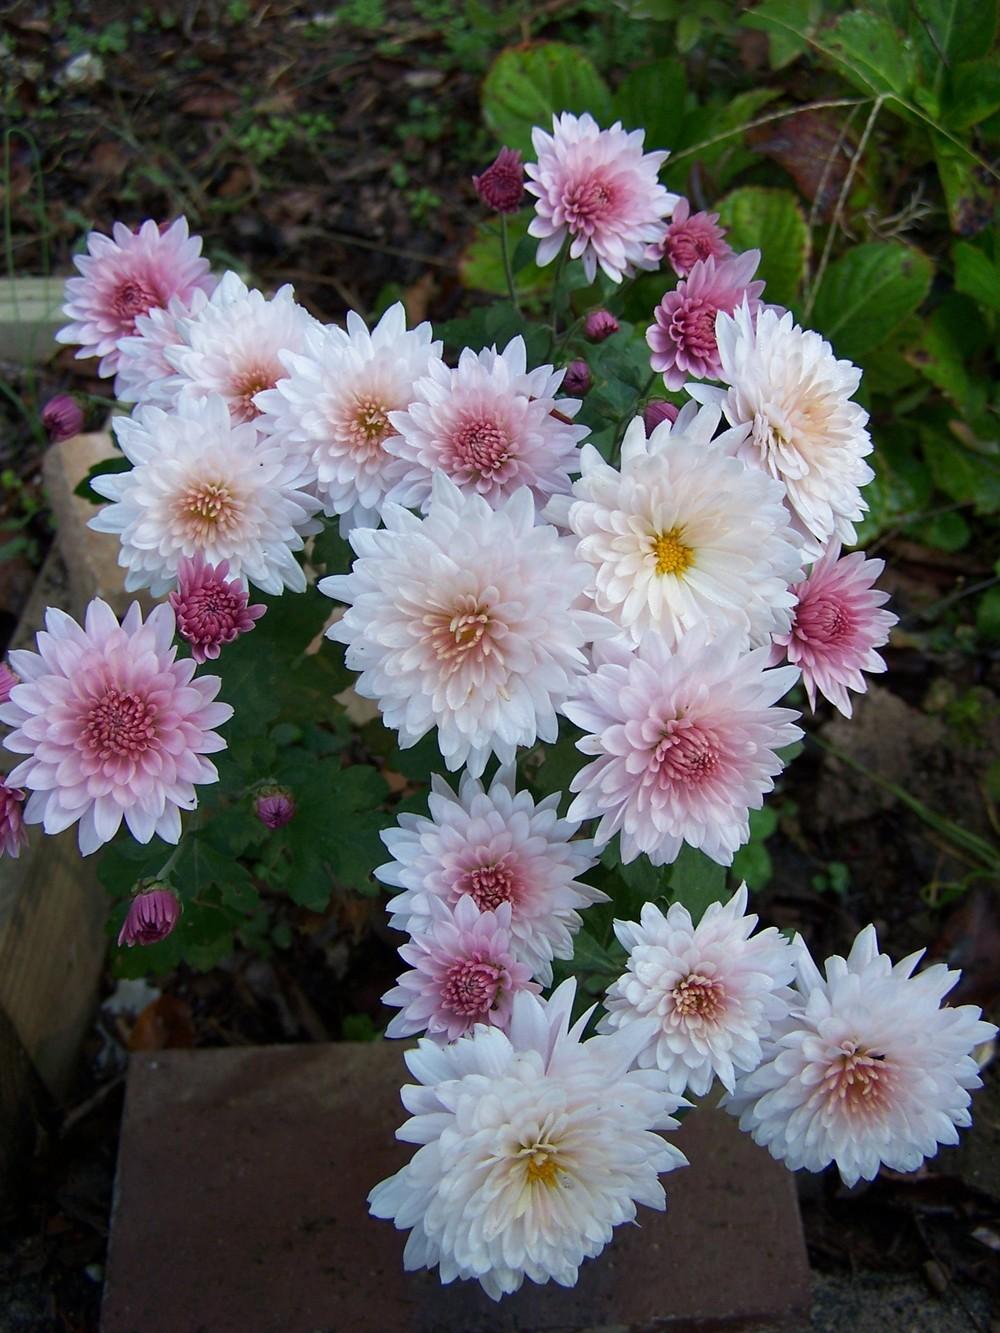 Photo of Chrysanthemum uploaded by chickhill